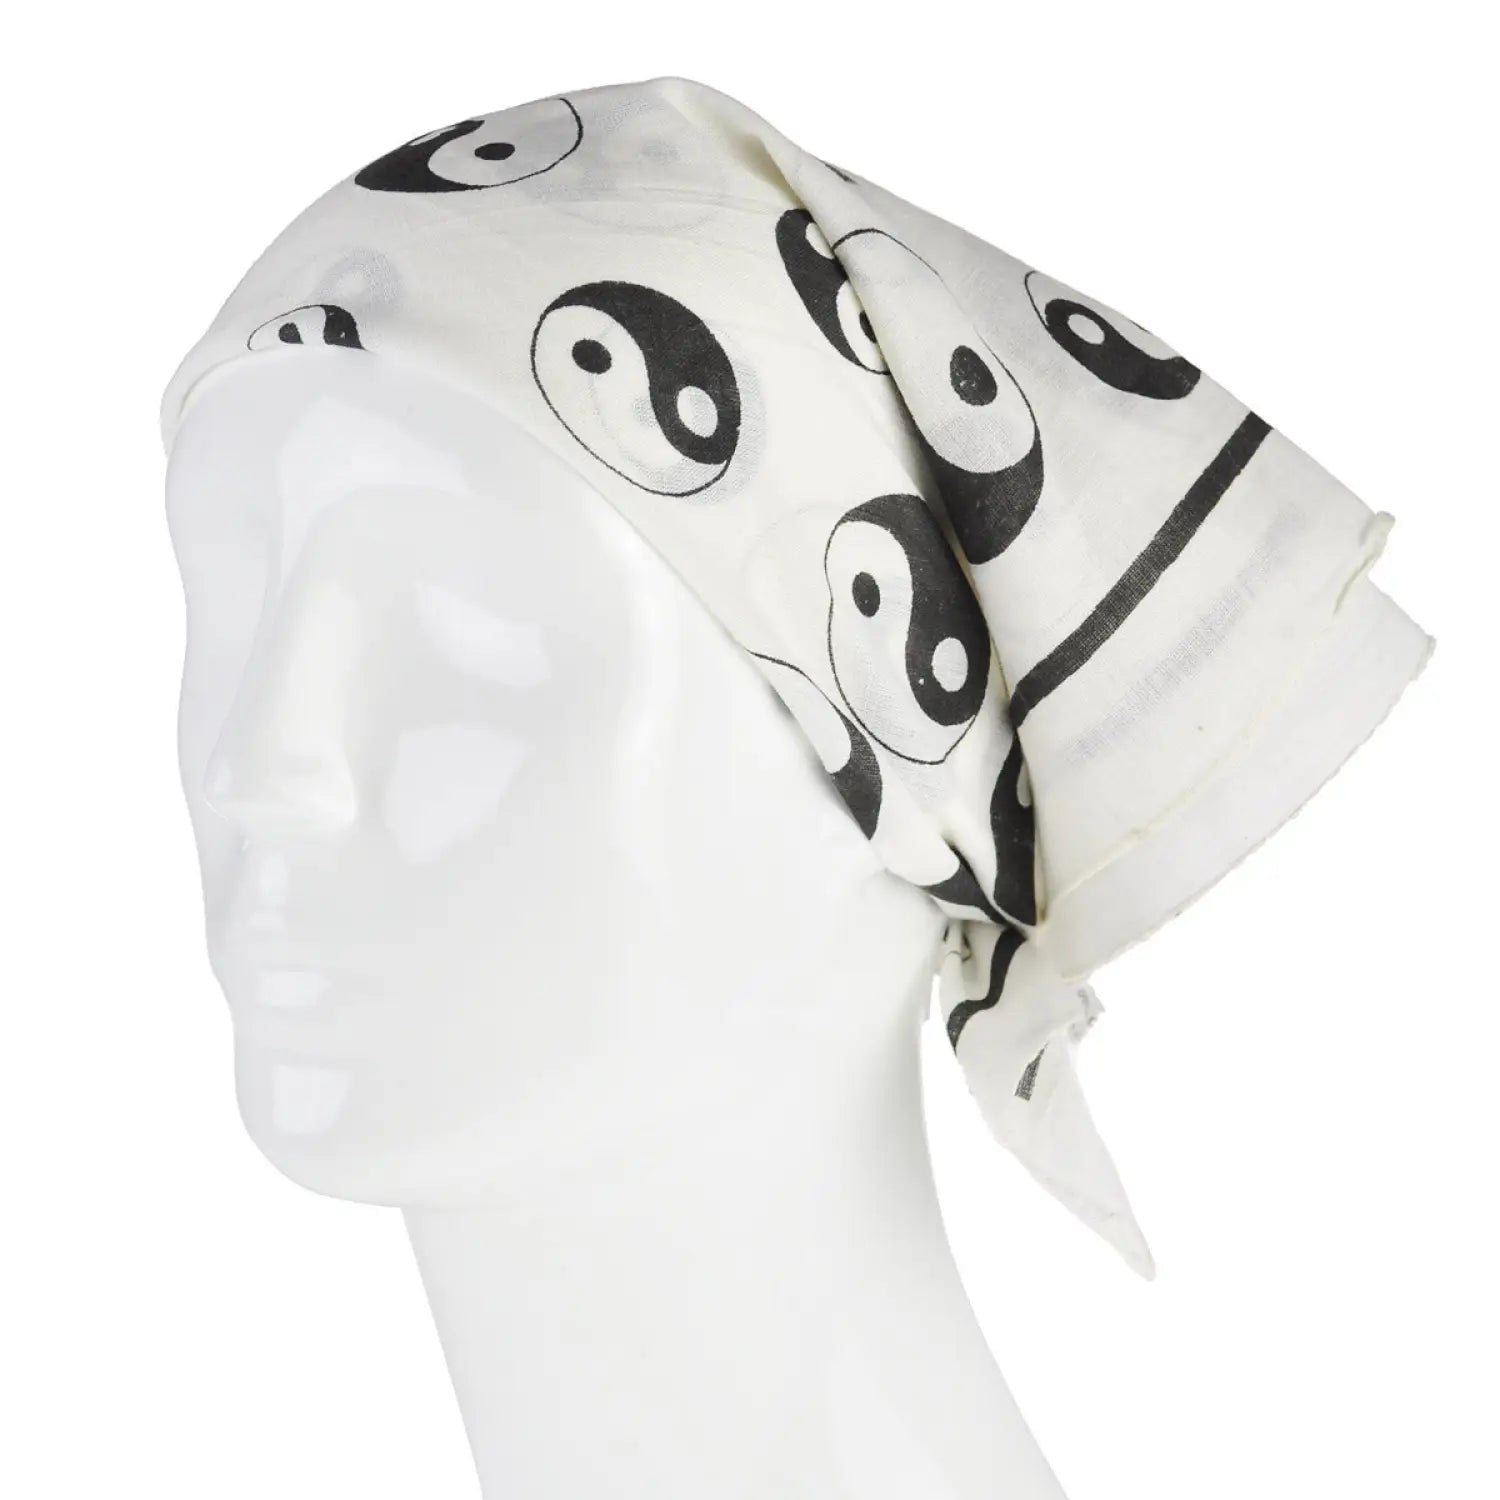 Ying Yang Print Square Bandana in 100% Cotton, silk head scarf.